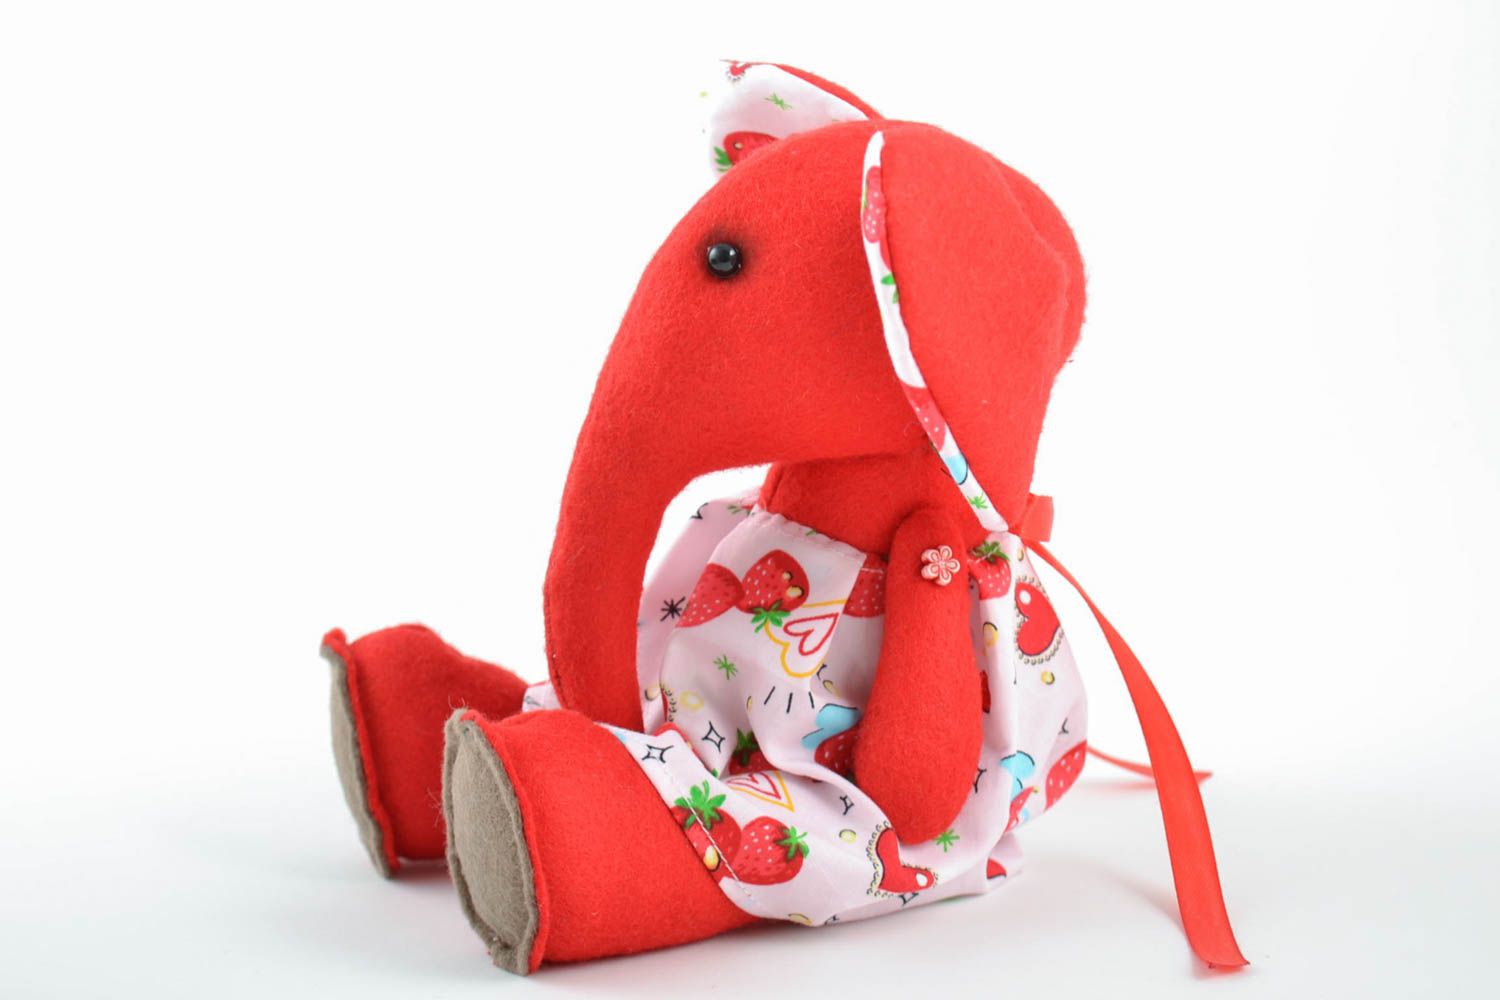 Children's nice handmade felt fabric soft toy elephant of red color photo 3